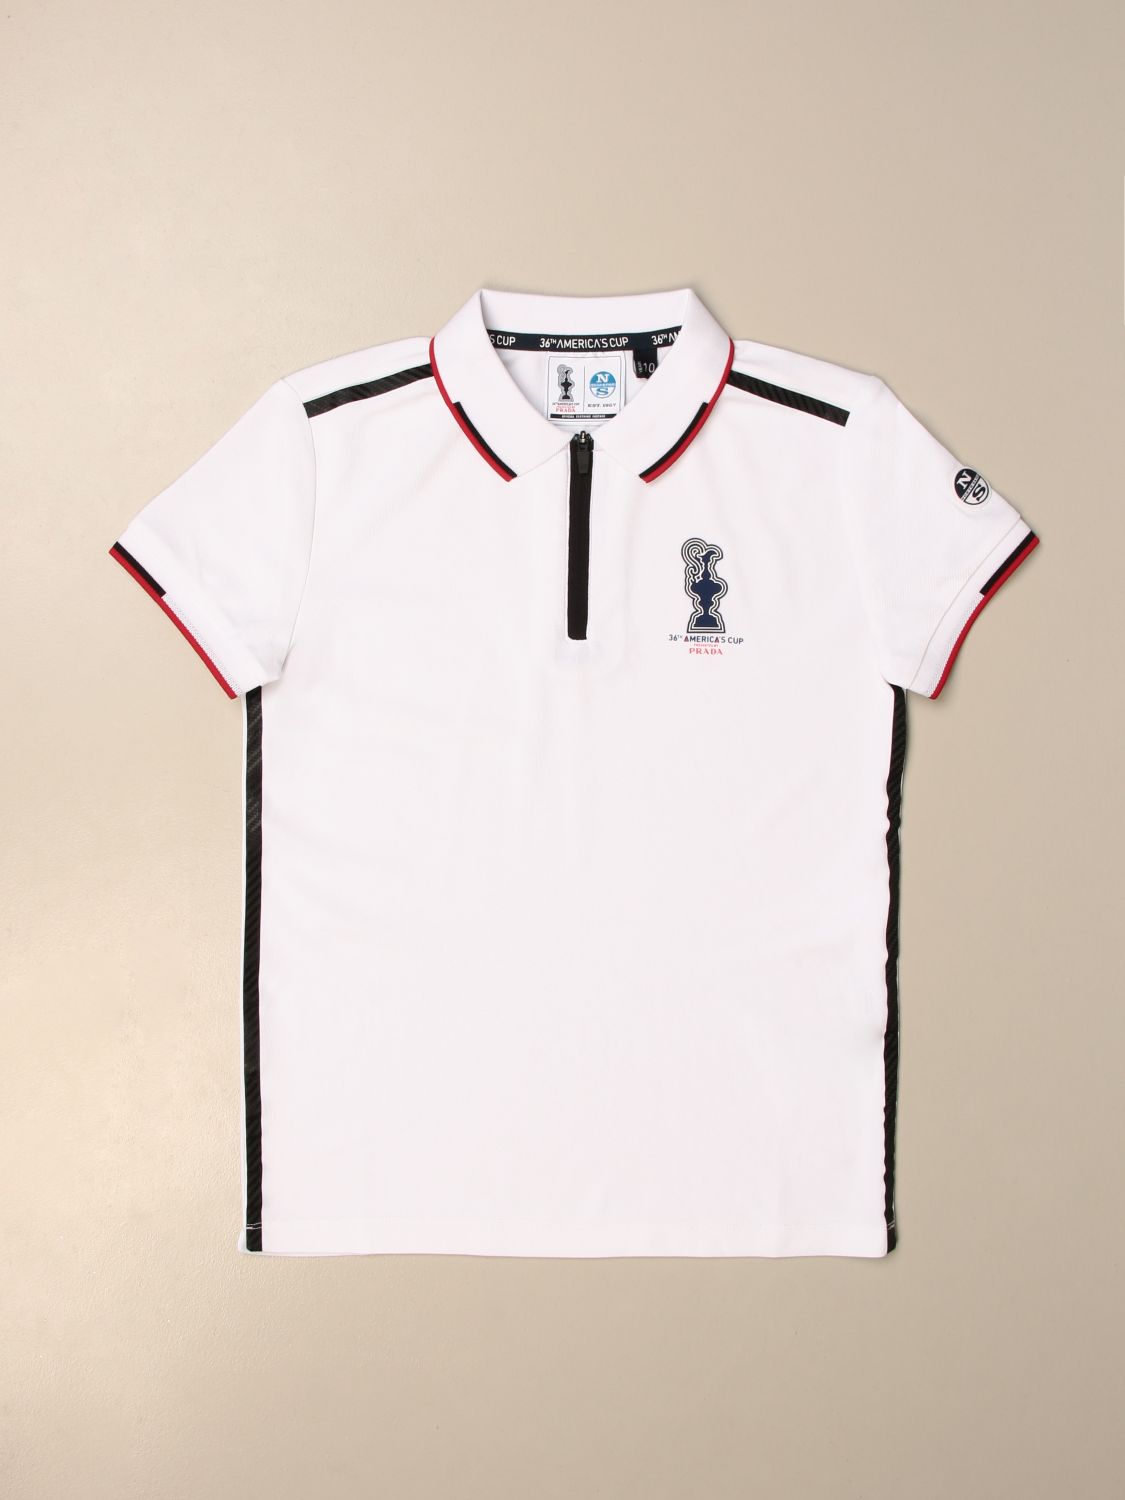 North Sails Prada Outlet: polo shirt for boys - White | North Sails Prada  polo shirt 452800 online on 